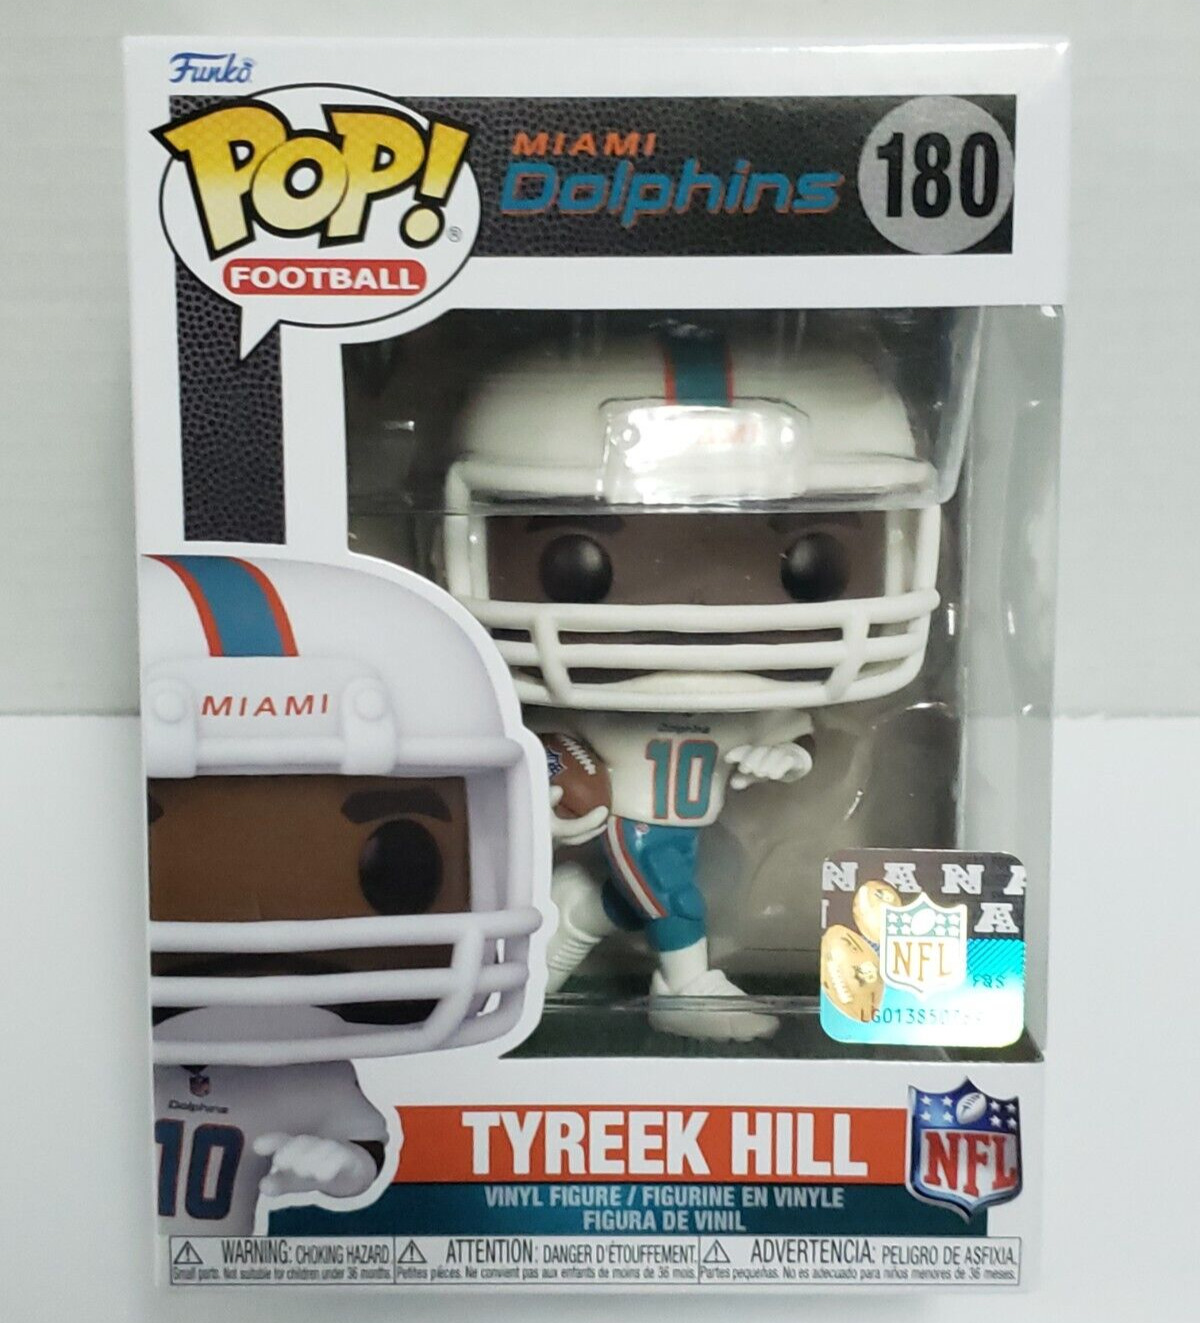 TYREEK HILL - Miami Dolphins - Funko Pop NFL #180 Collectible Vinyl Figure NEW